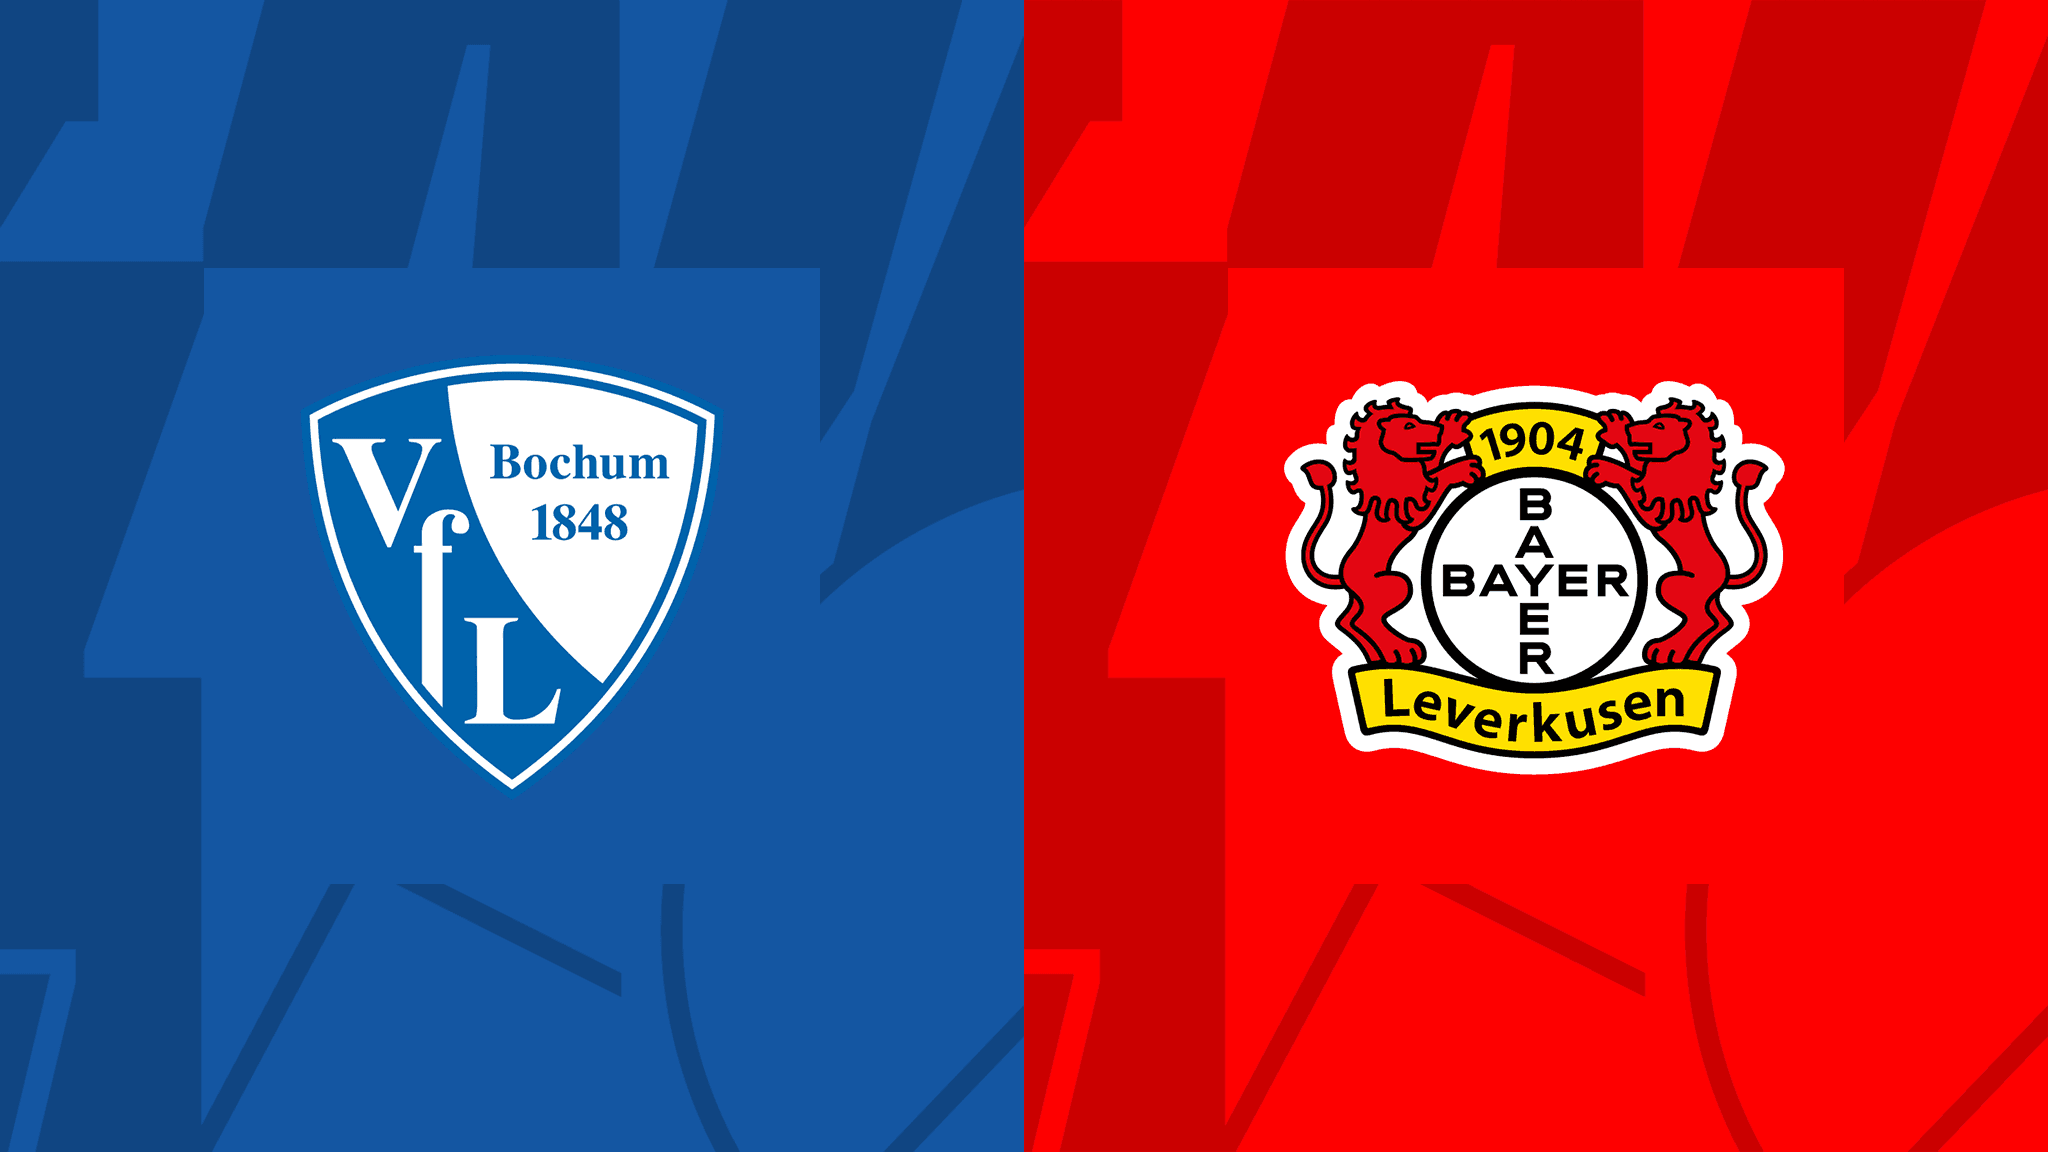 Bochum vs Leverkusen, (12 May, 19:30)